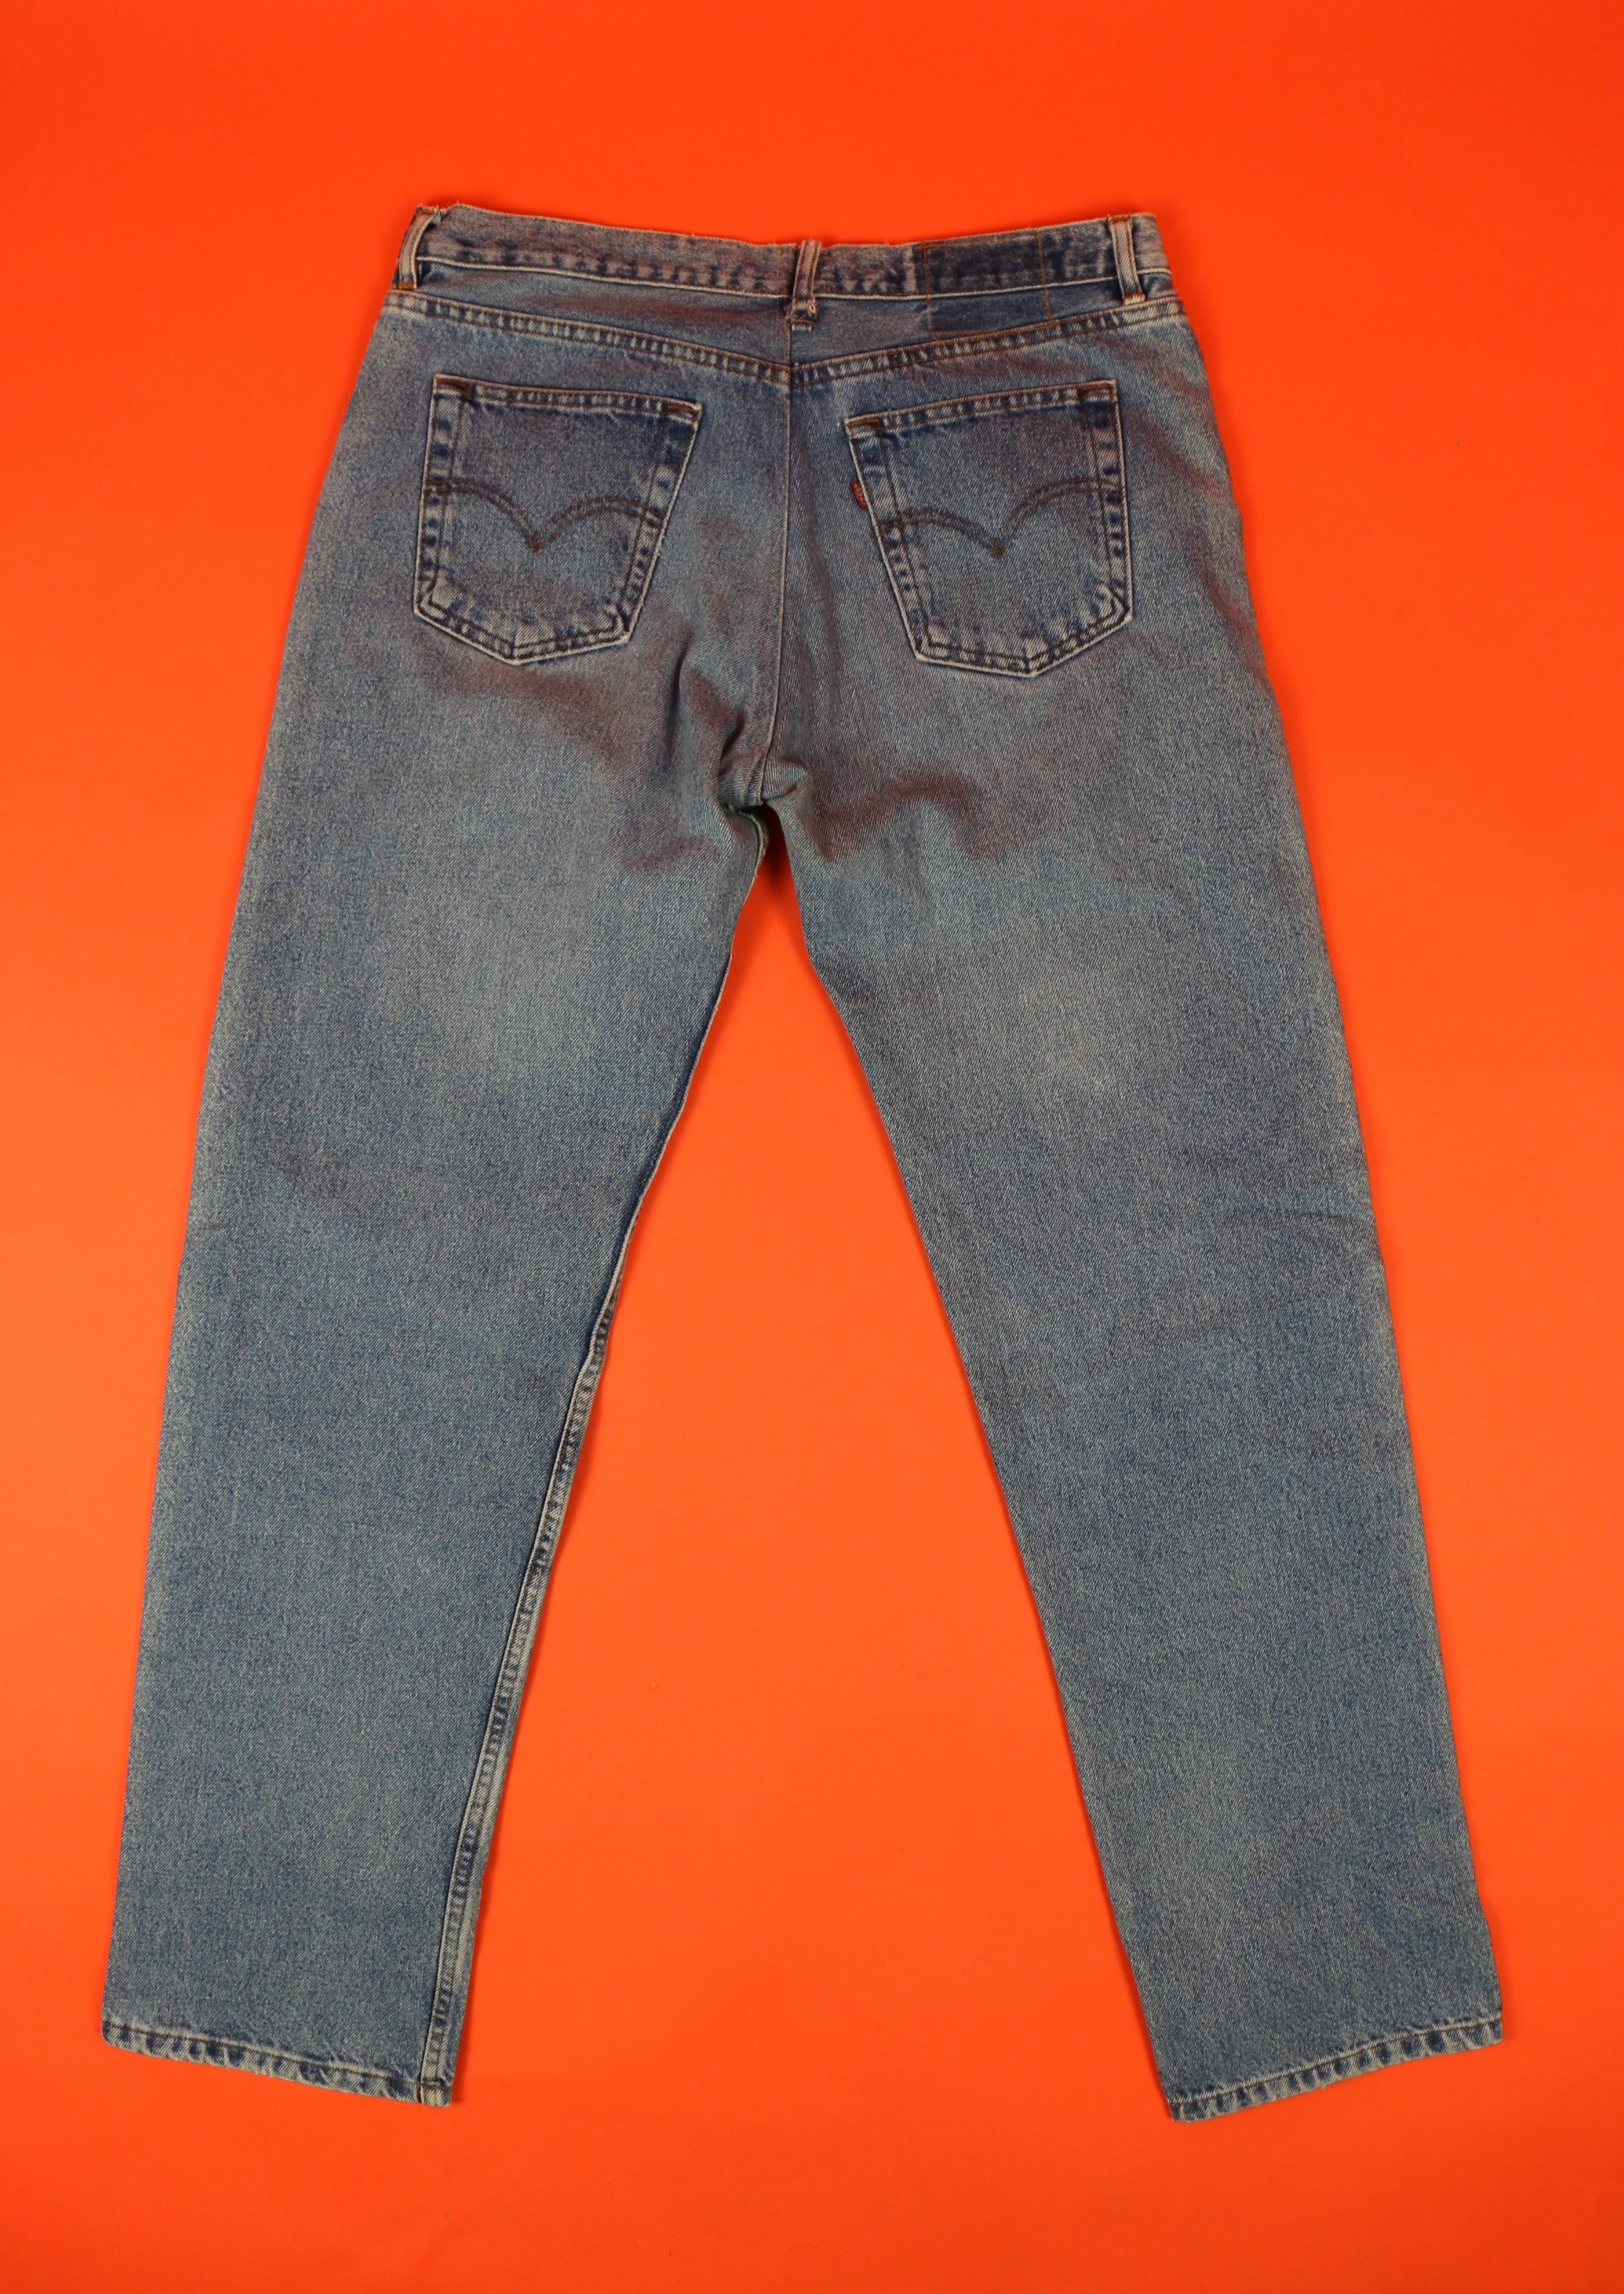 Levi's 501 Made in U.S.A. Jeans W38 L34 ~ Vintage Store Clochard92.com